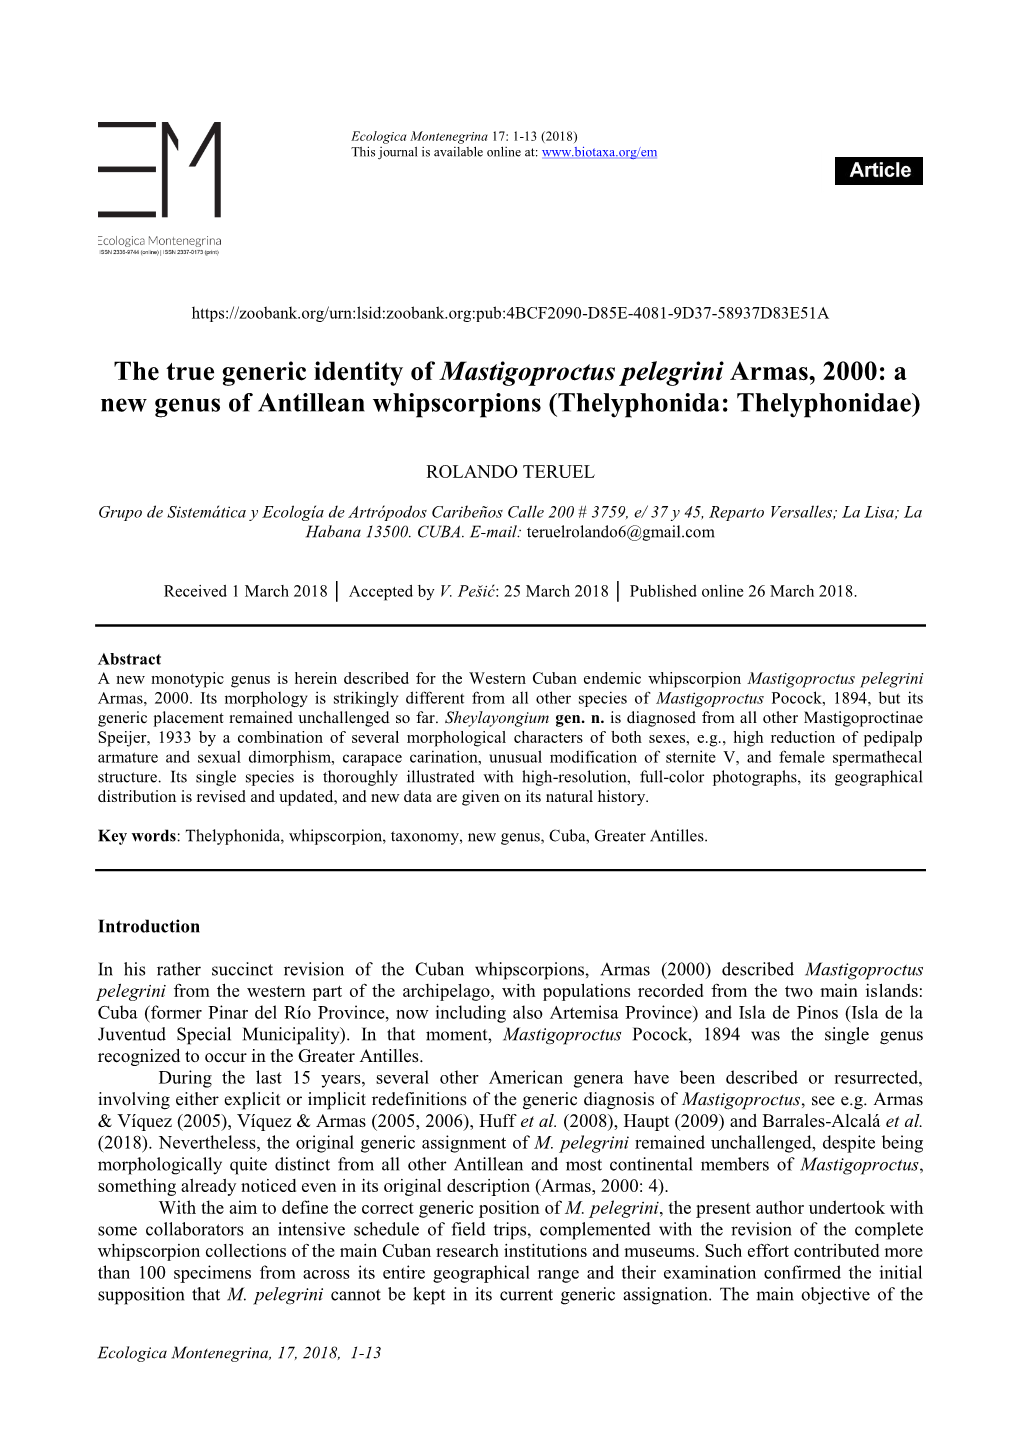 The True Generic Identity of Mastigoproctus Pelegrini Armas, 2000: a New Genus of Antillean Whipscorpions (Thelyphonida: Thelyphonidae)